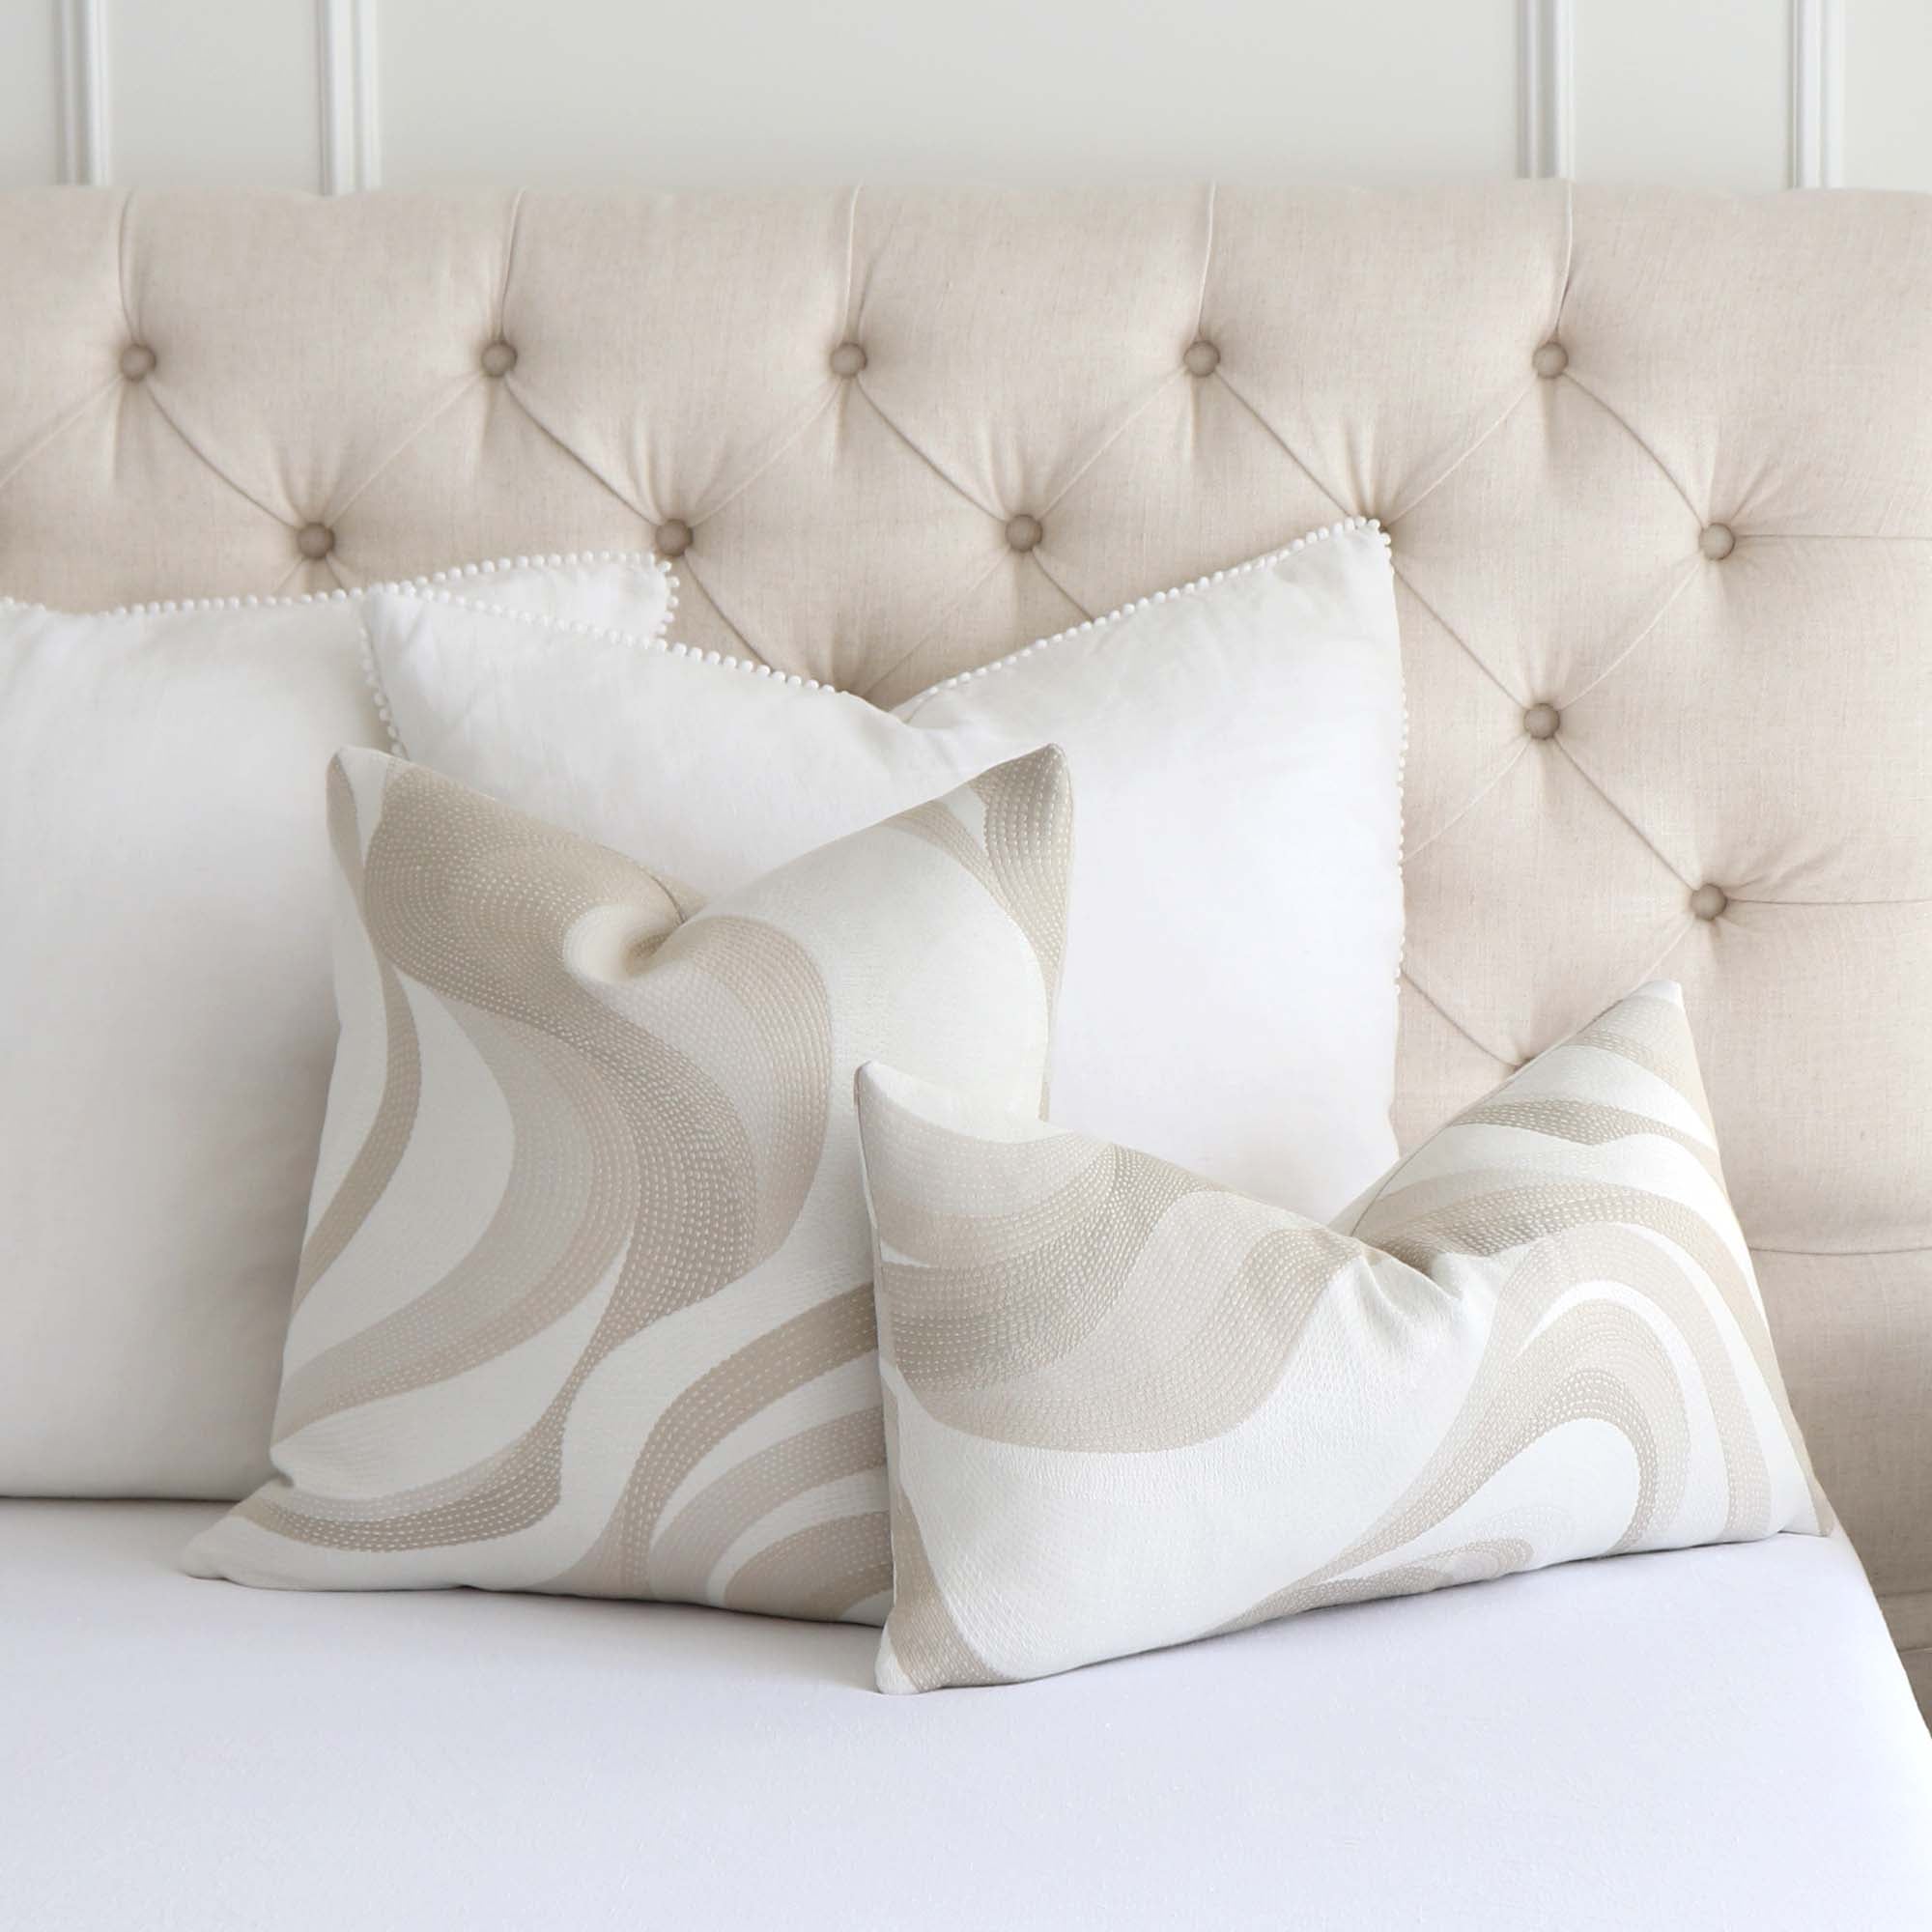 The Linen Large Throw Pillow 28x28